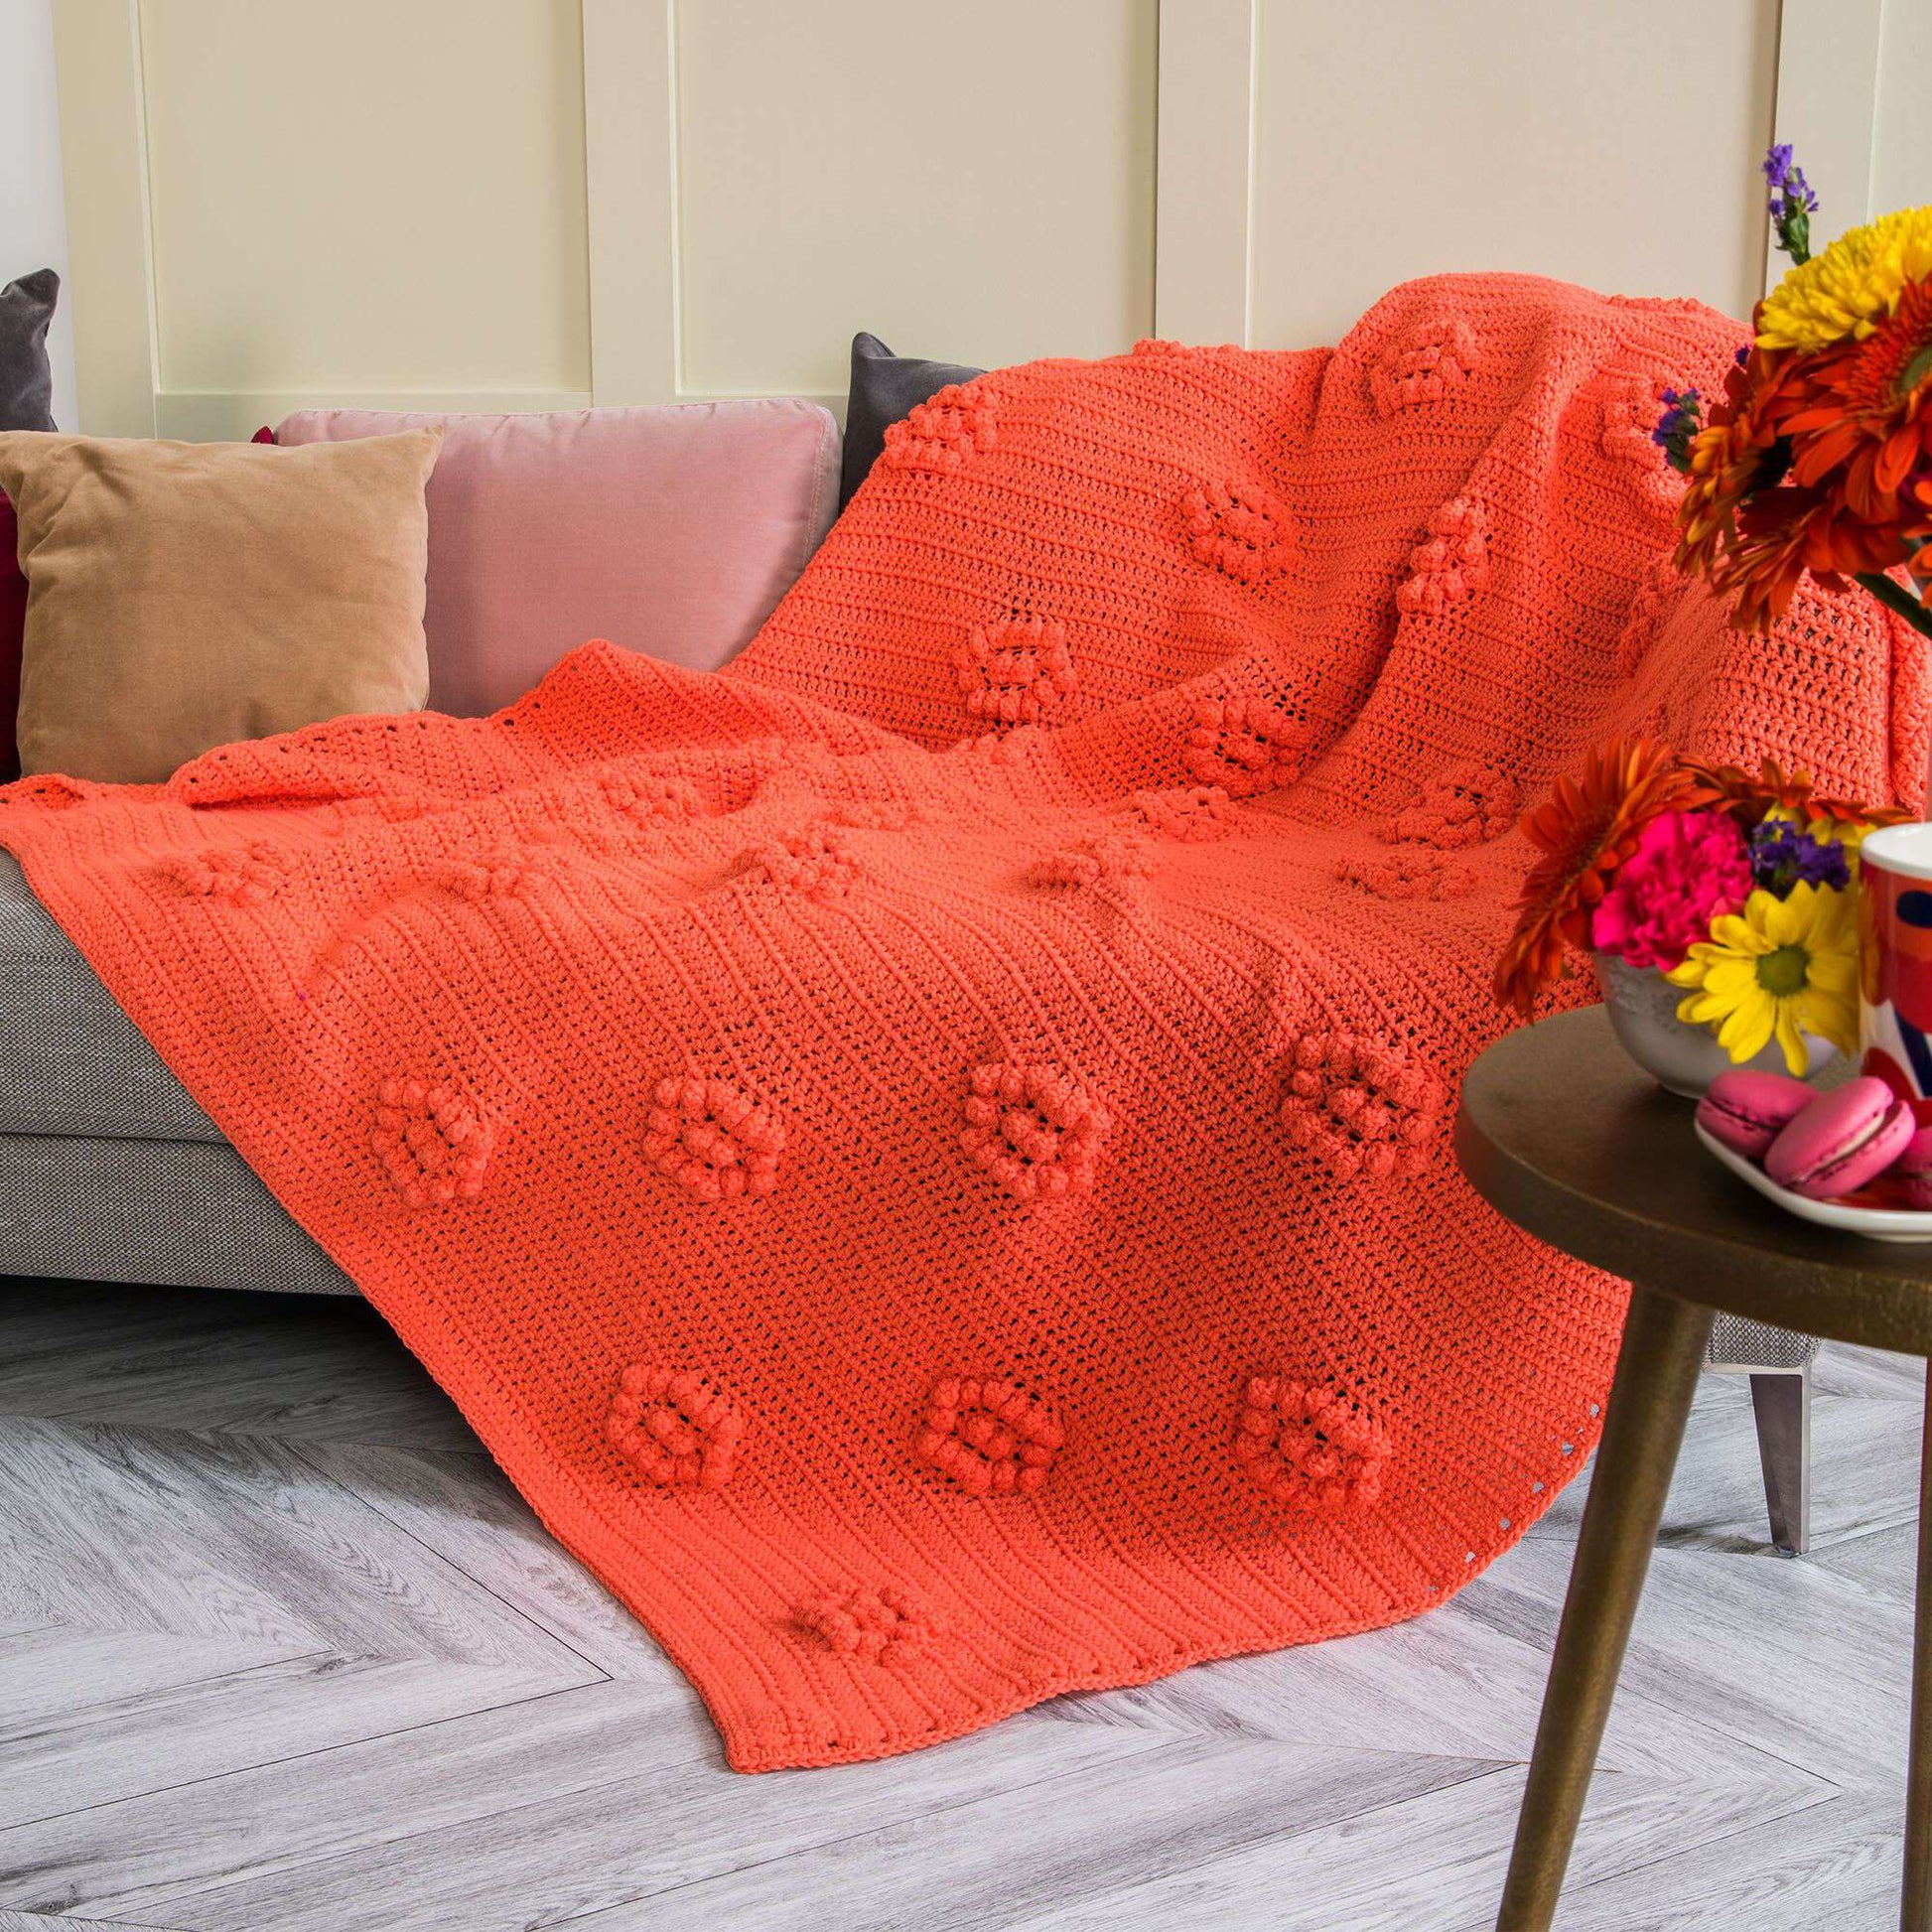 Free Caron Popcorn Blooms Crochet Blanket Pattern